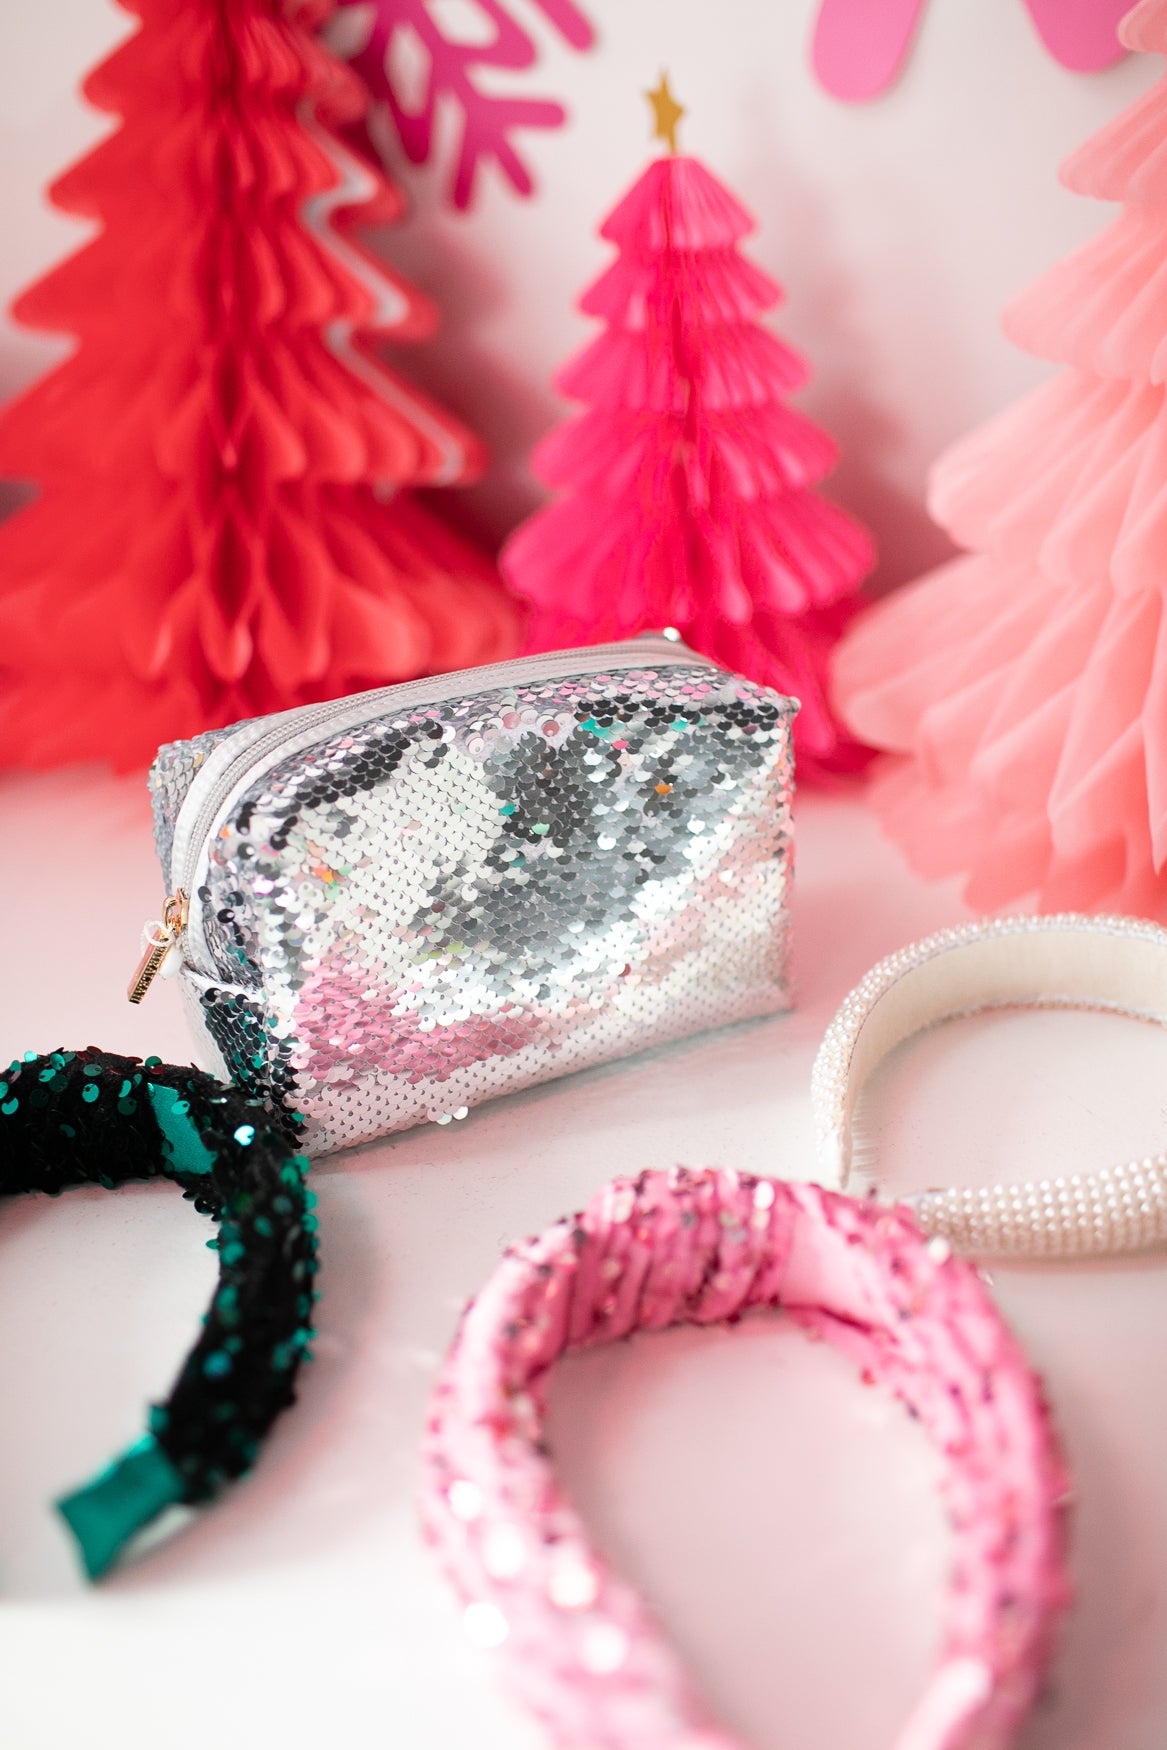 Christmas Pattern DIY Knotted Headband Kit - Nutcrackers on Pink